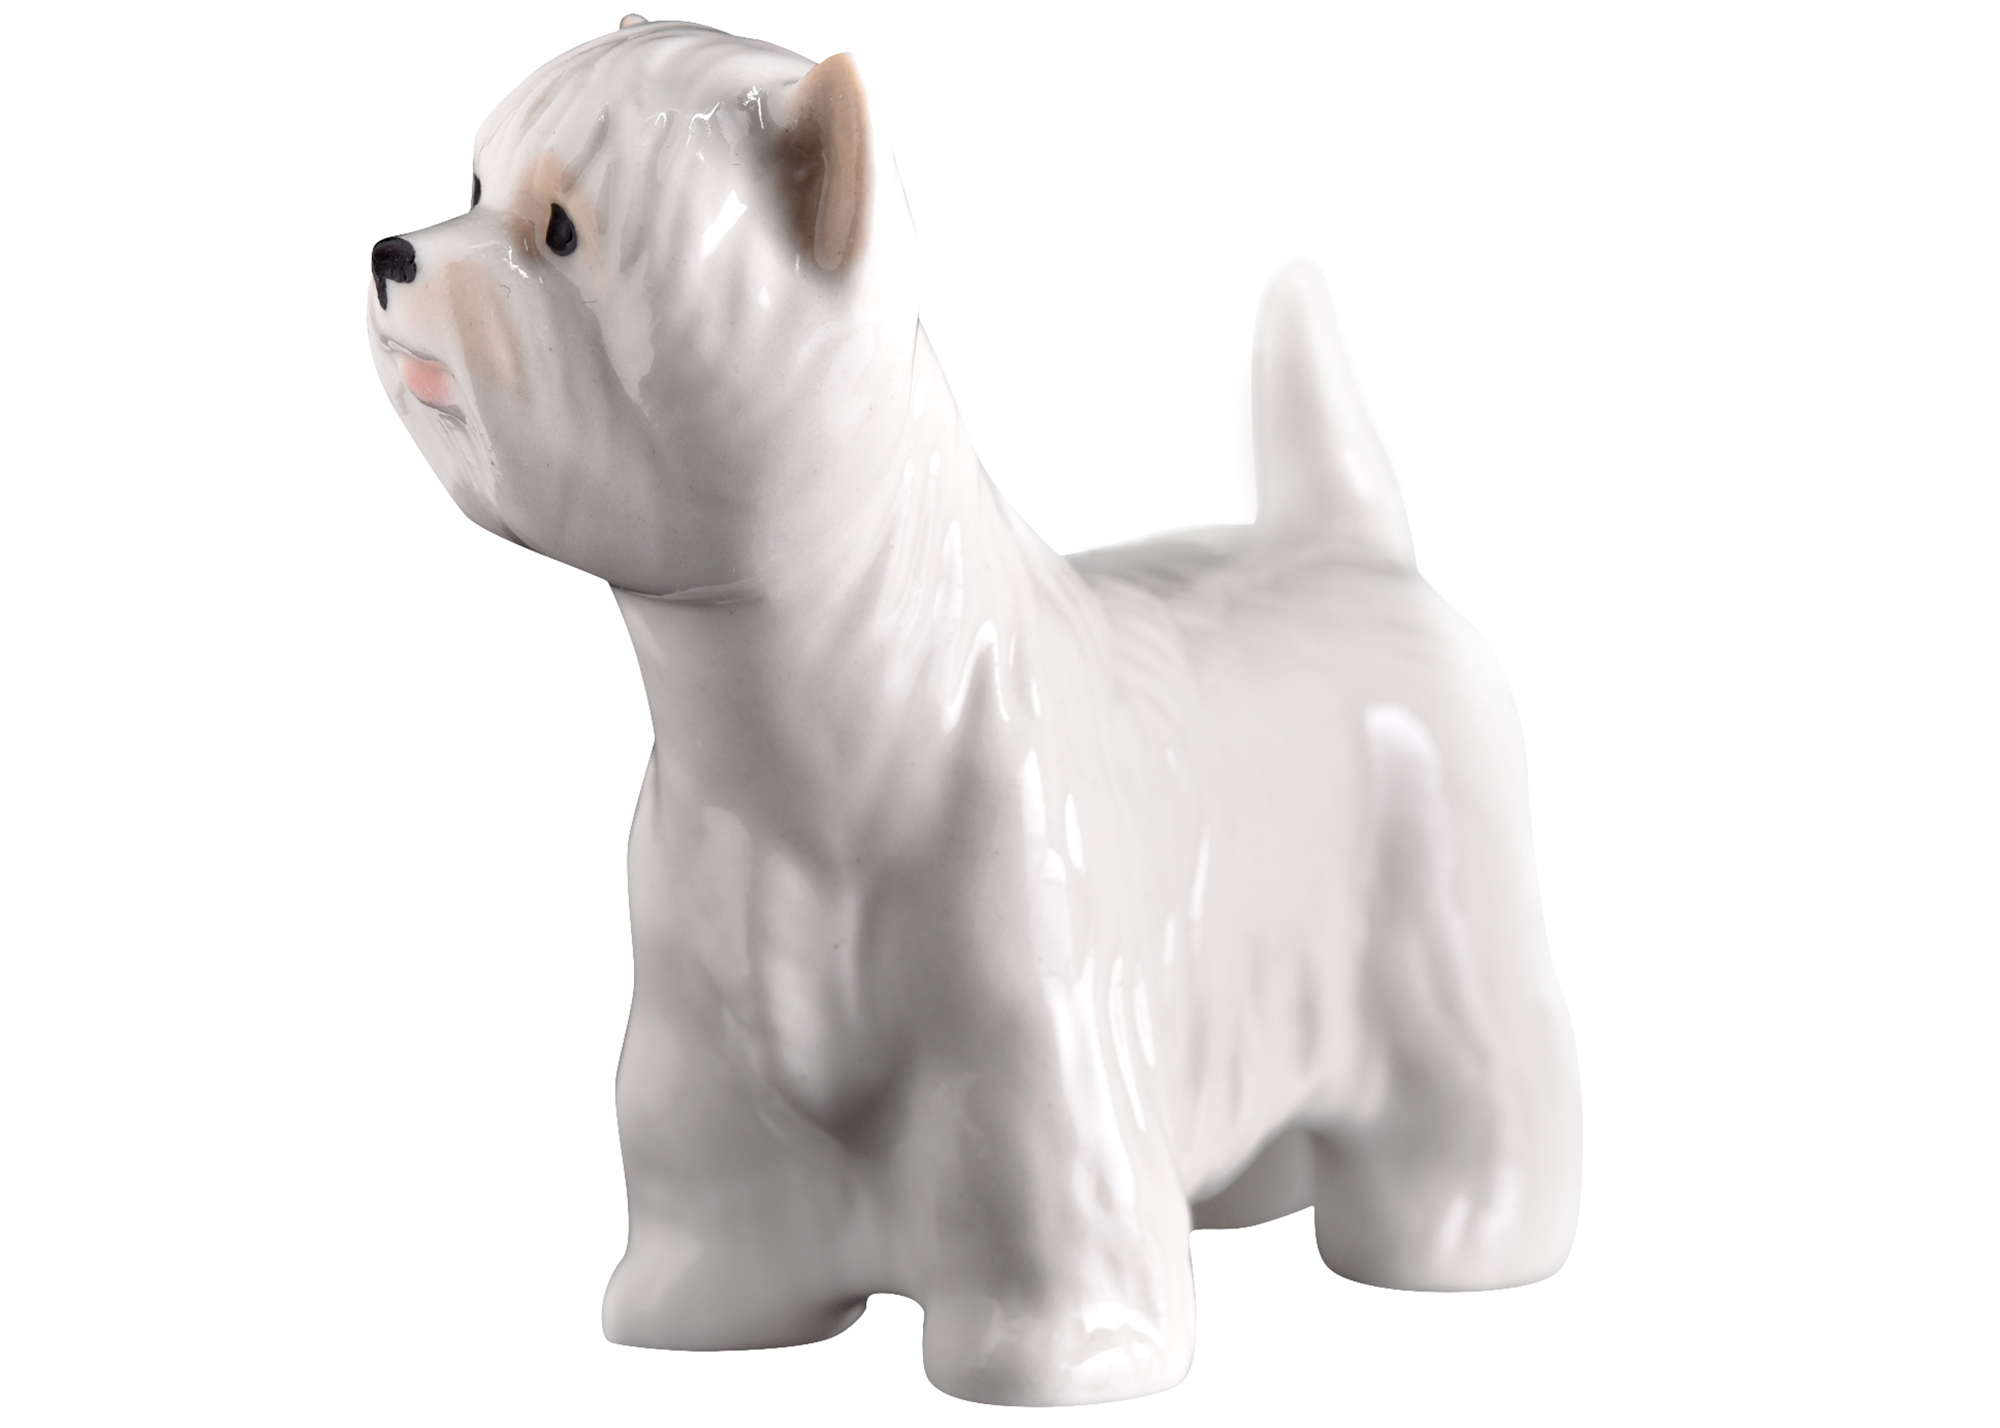 Buy West Highland Terrier Westie Figurine 3" at GoldenCockerel.com